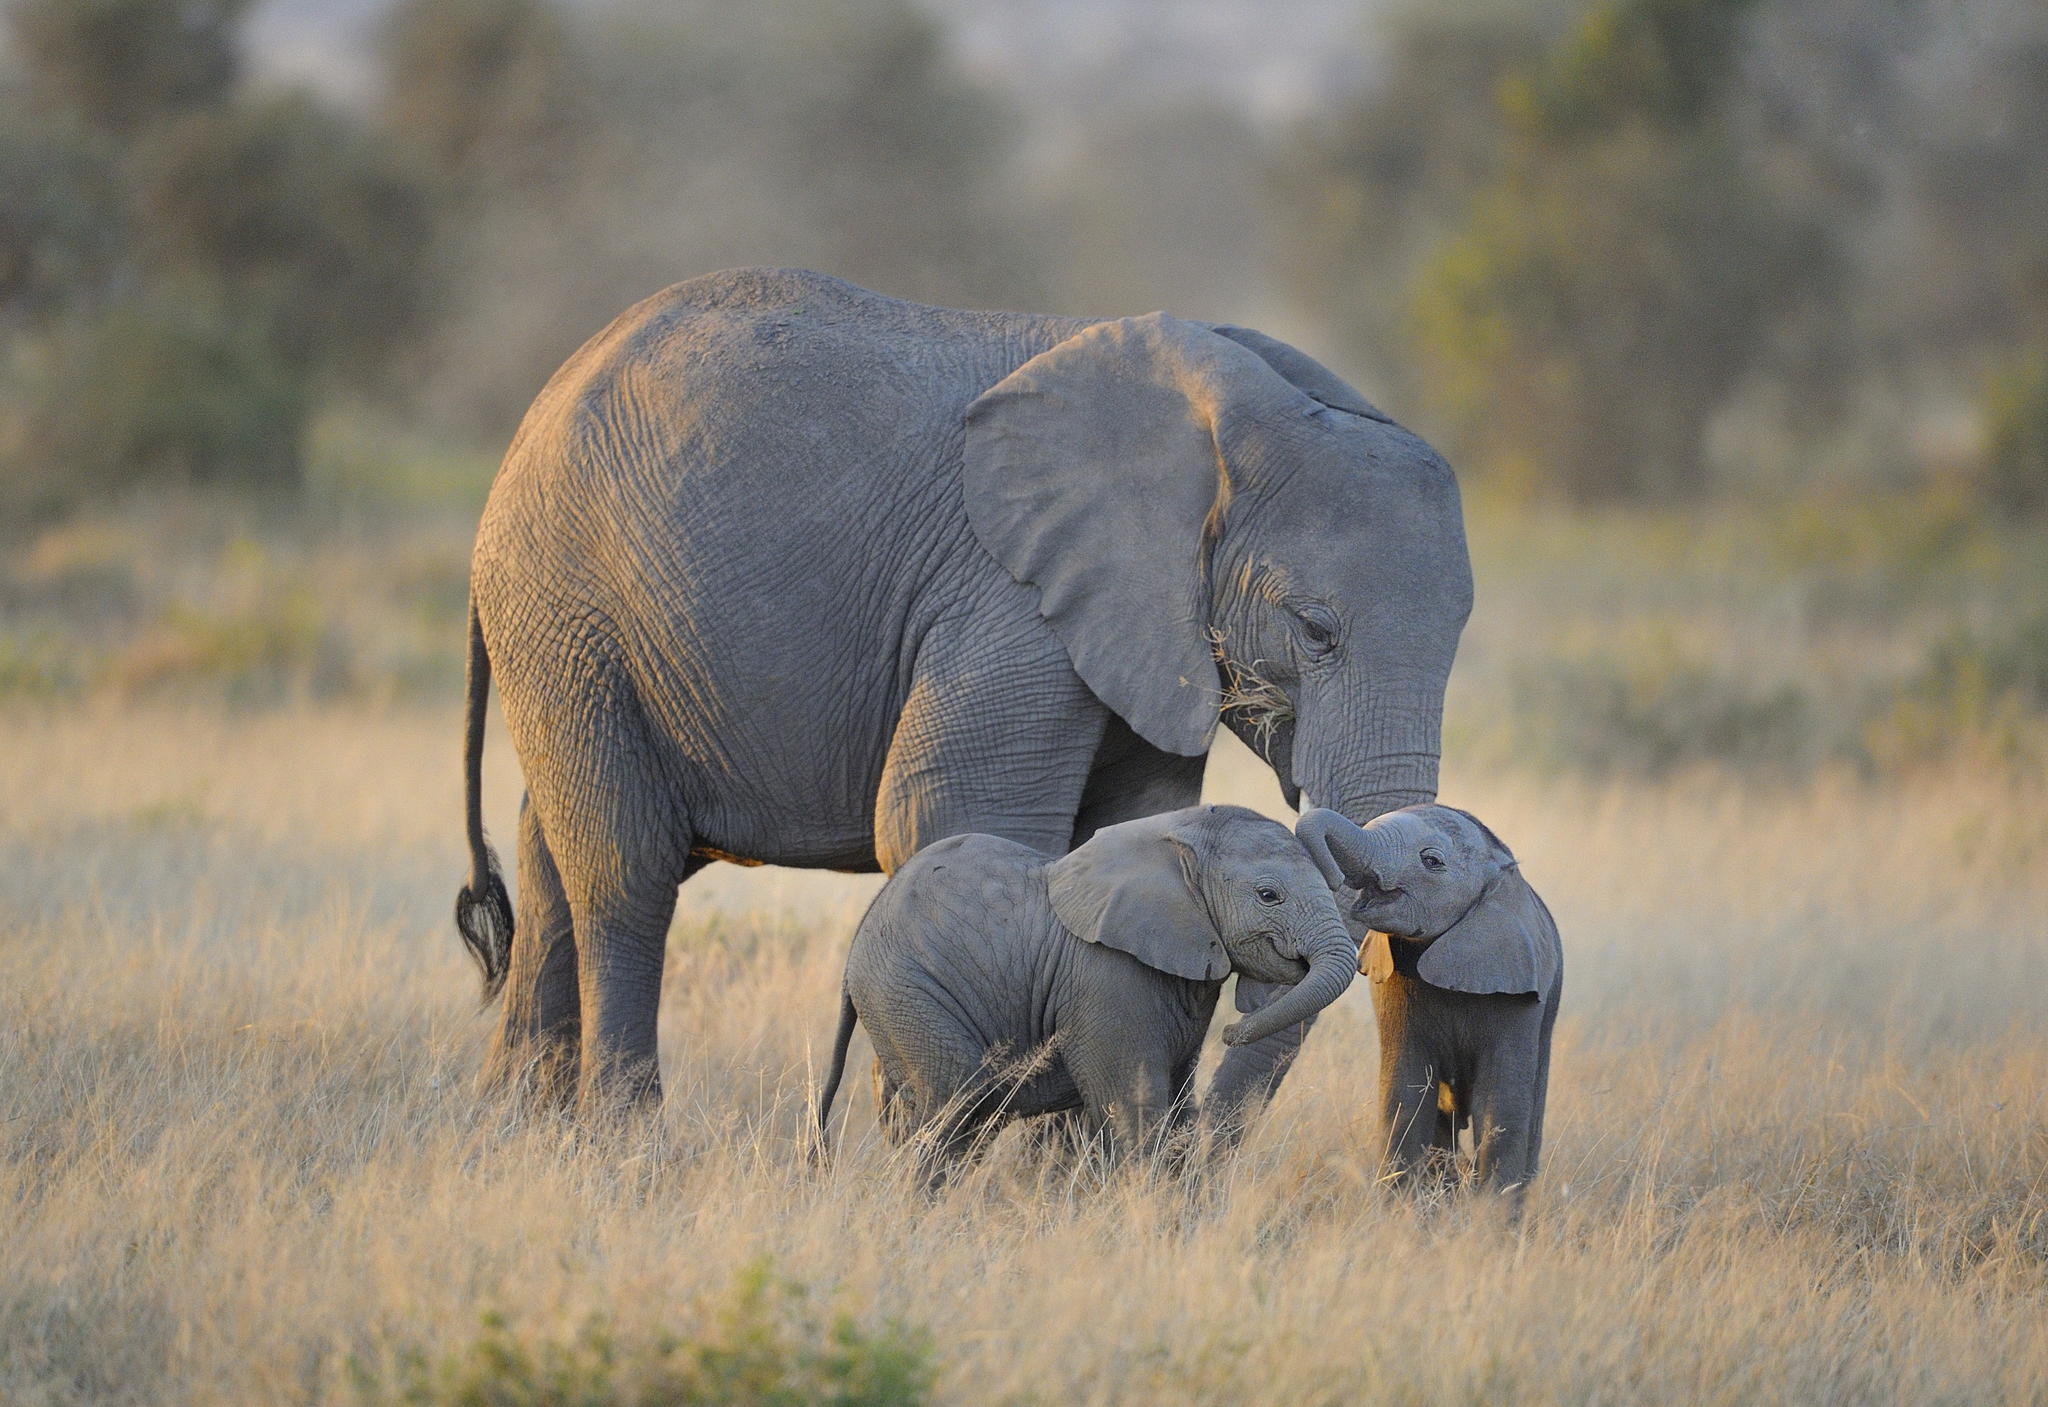  these baby adorable elephants elephant 